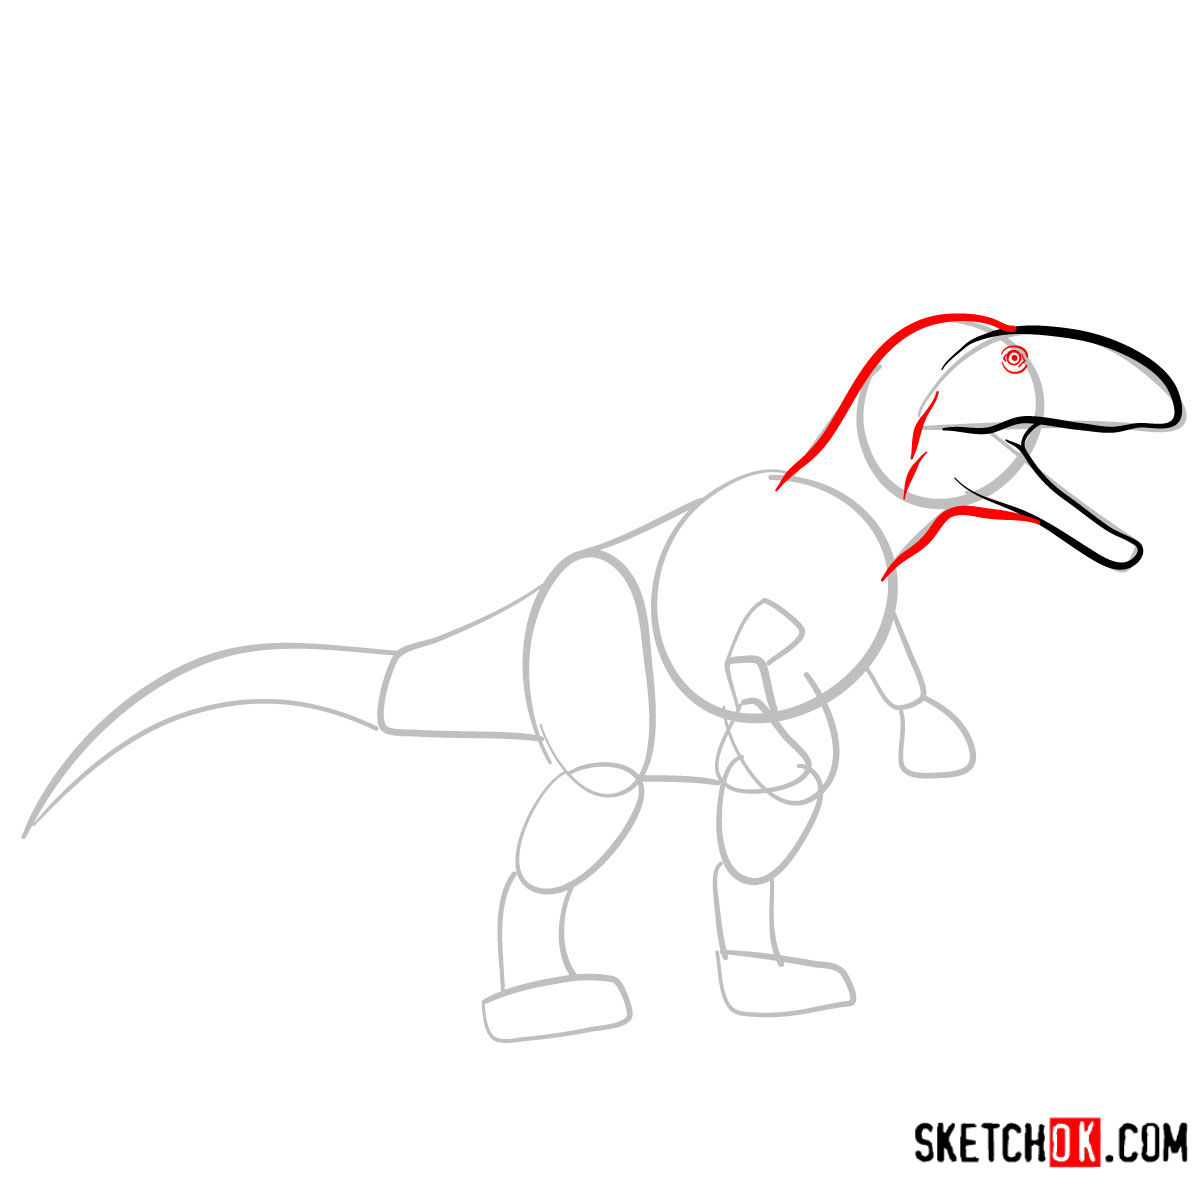 How to draw a Carcharodontosaurus | Extinct Animals - step 04